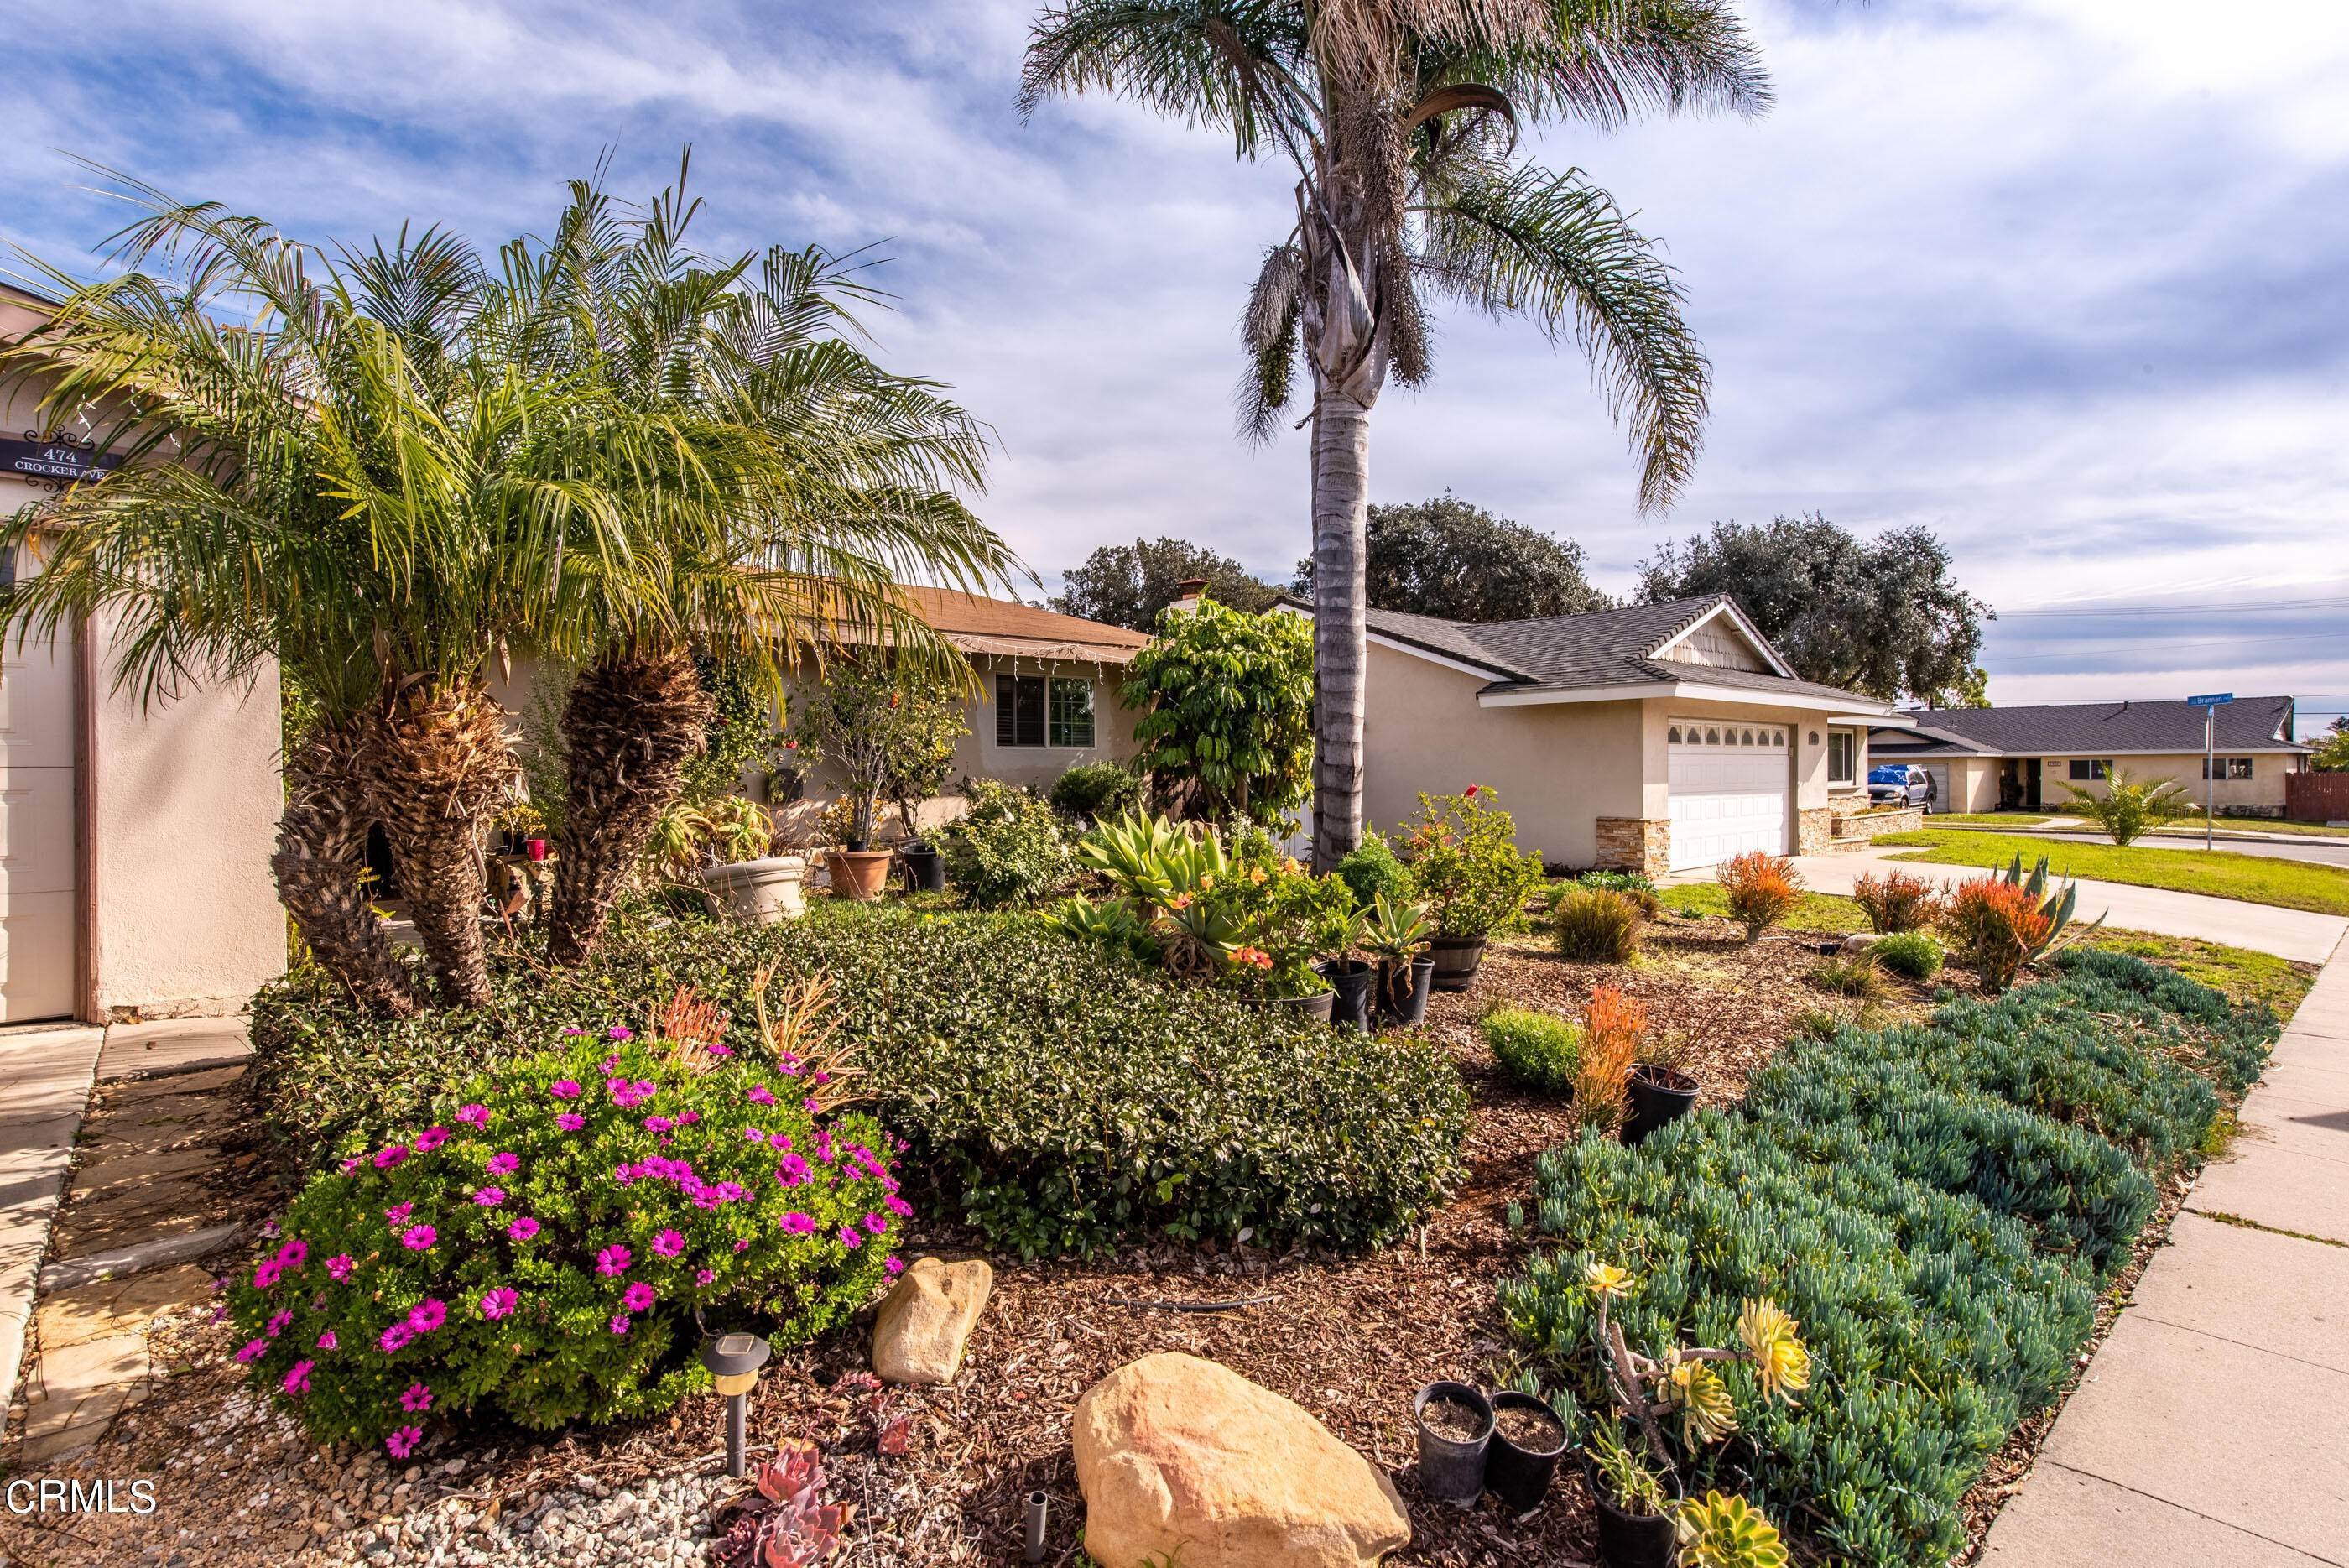 2. Single Family Homes for Sale at 474 South Crocker Avenue Ventura, California 93004 United States